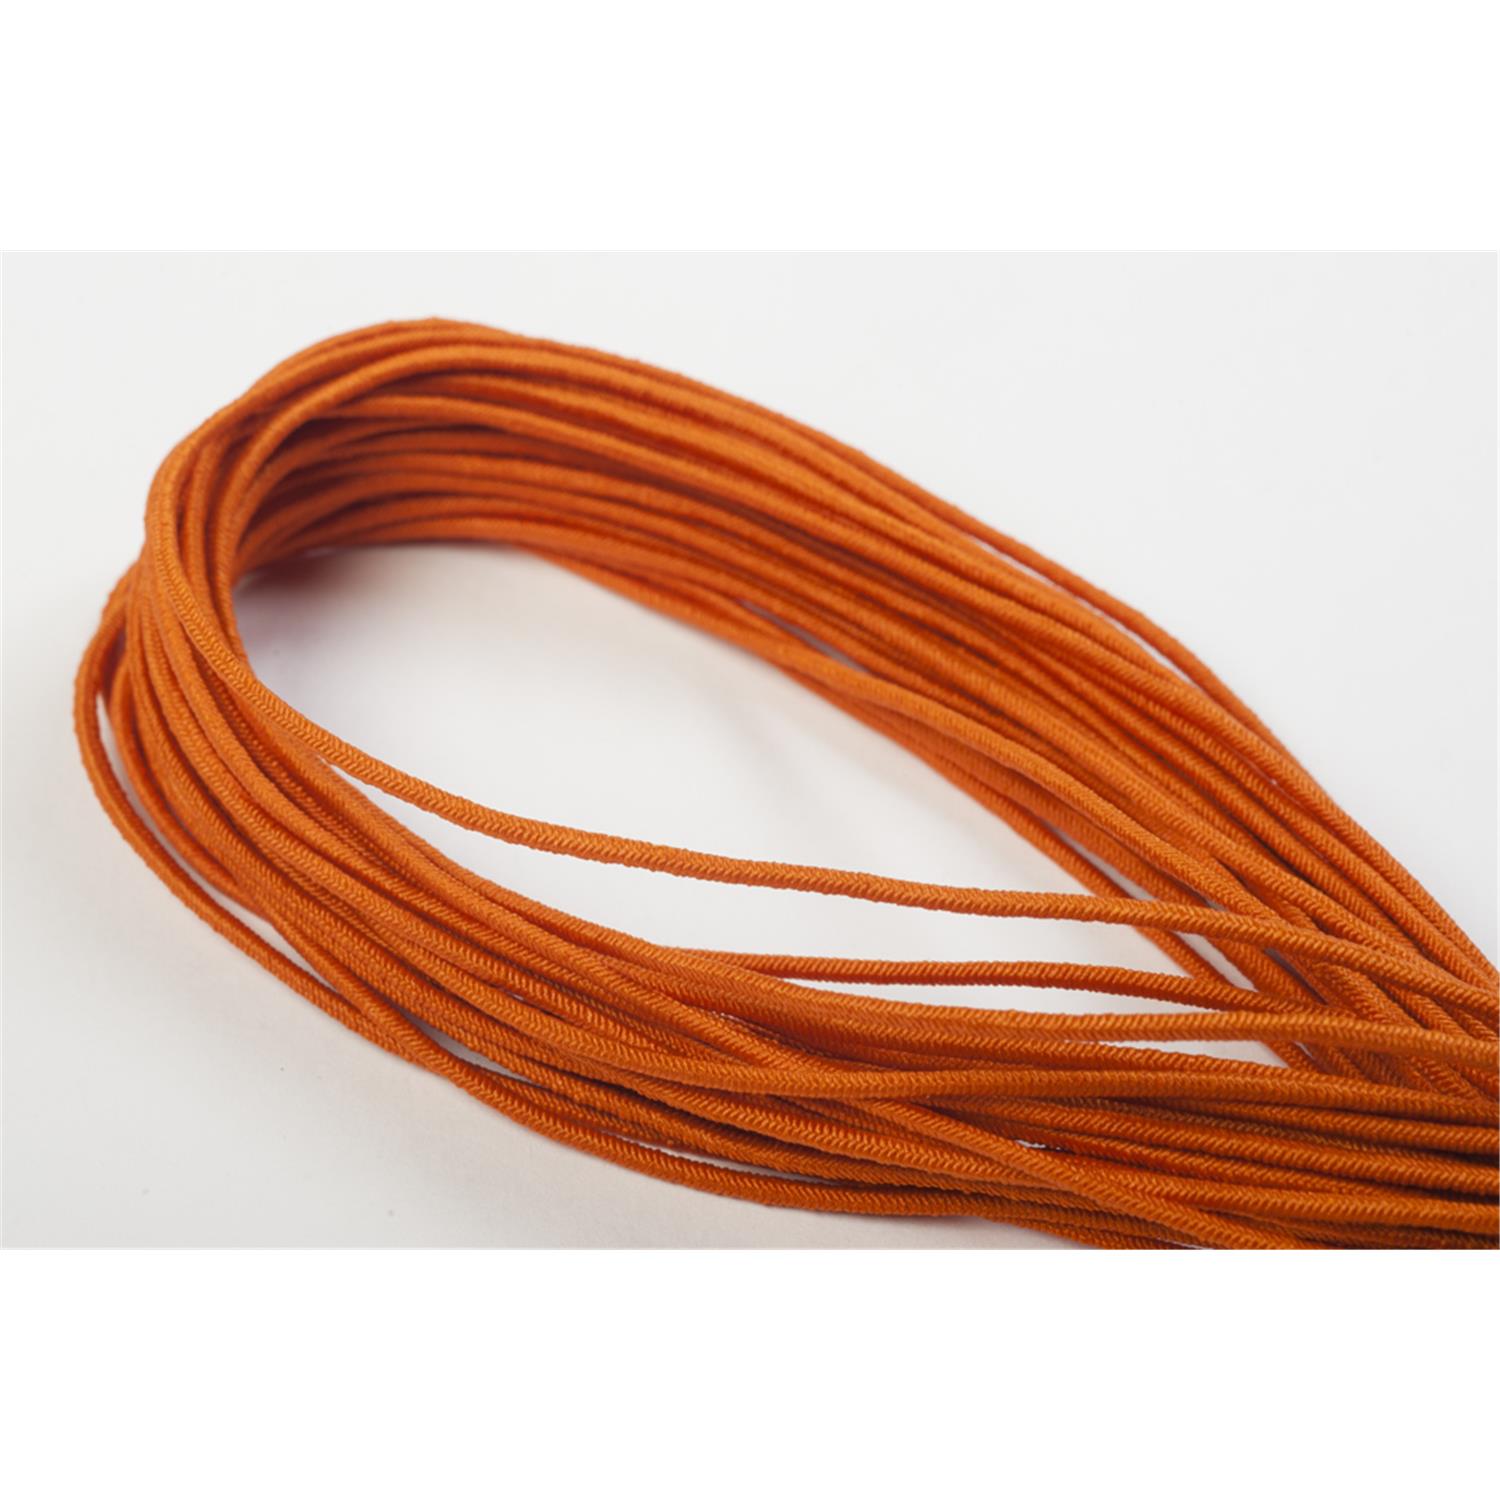 Elastische Kordeln / Hutgummi 2,5 mm dick in 19 Farben 05 / orange 100 m